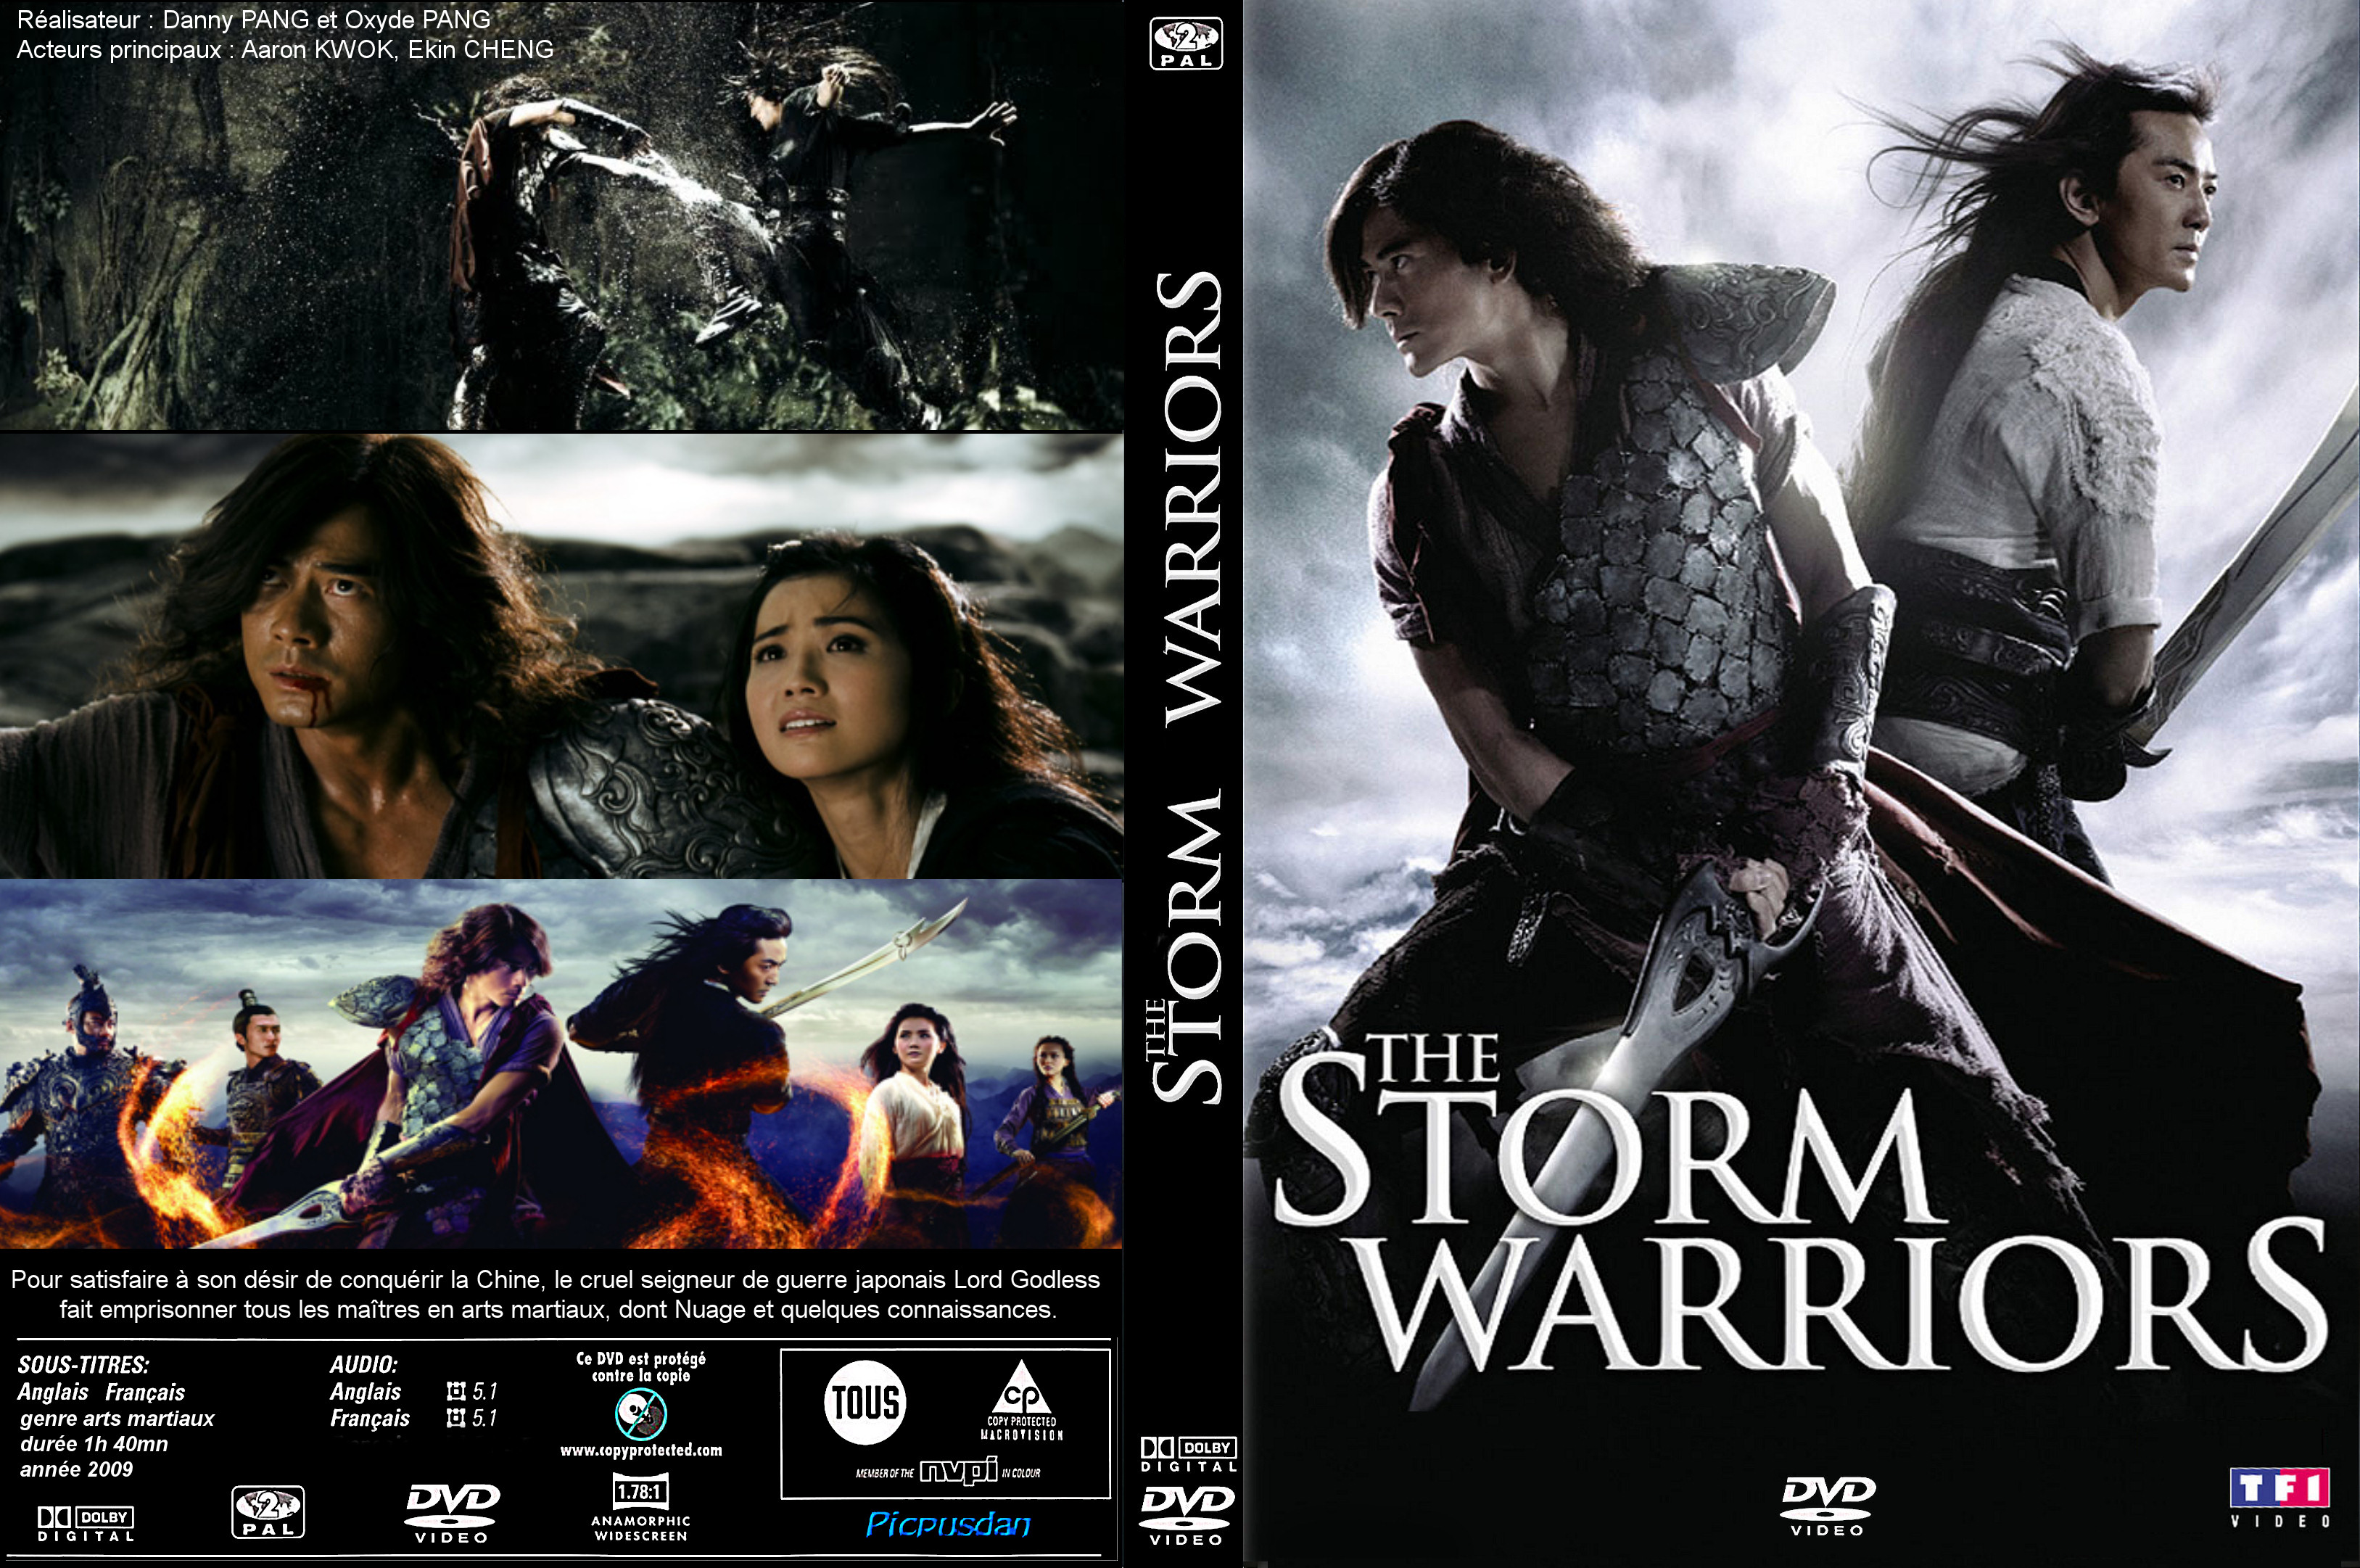 Jaquette DVD The storm warriors custom